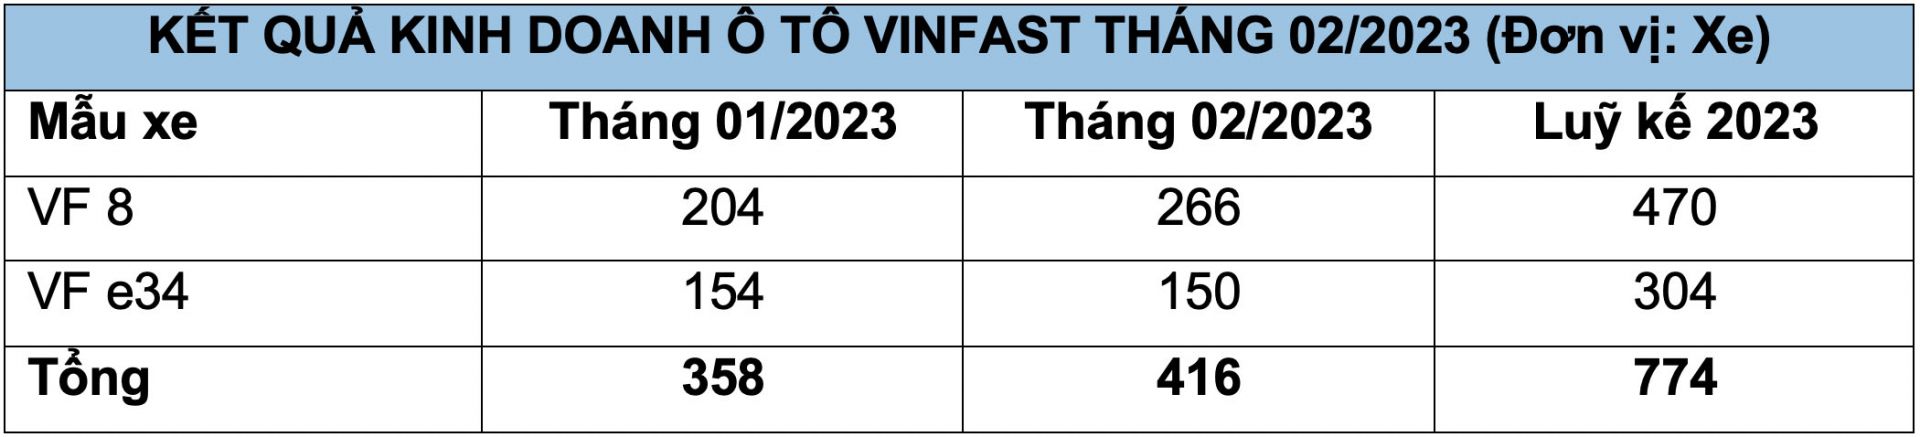 Kết quả kinh doanh VinFast